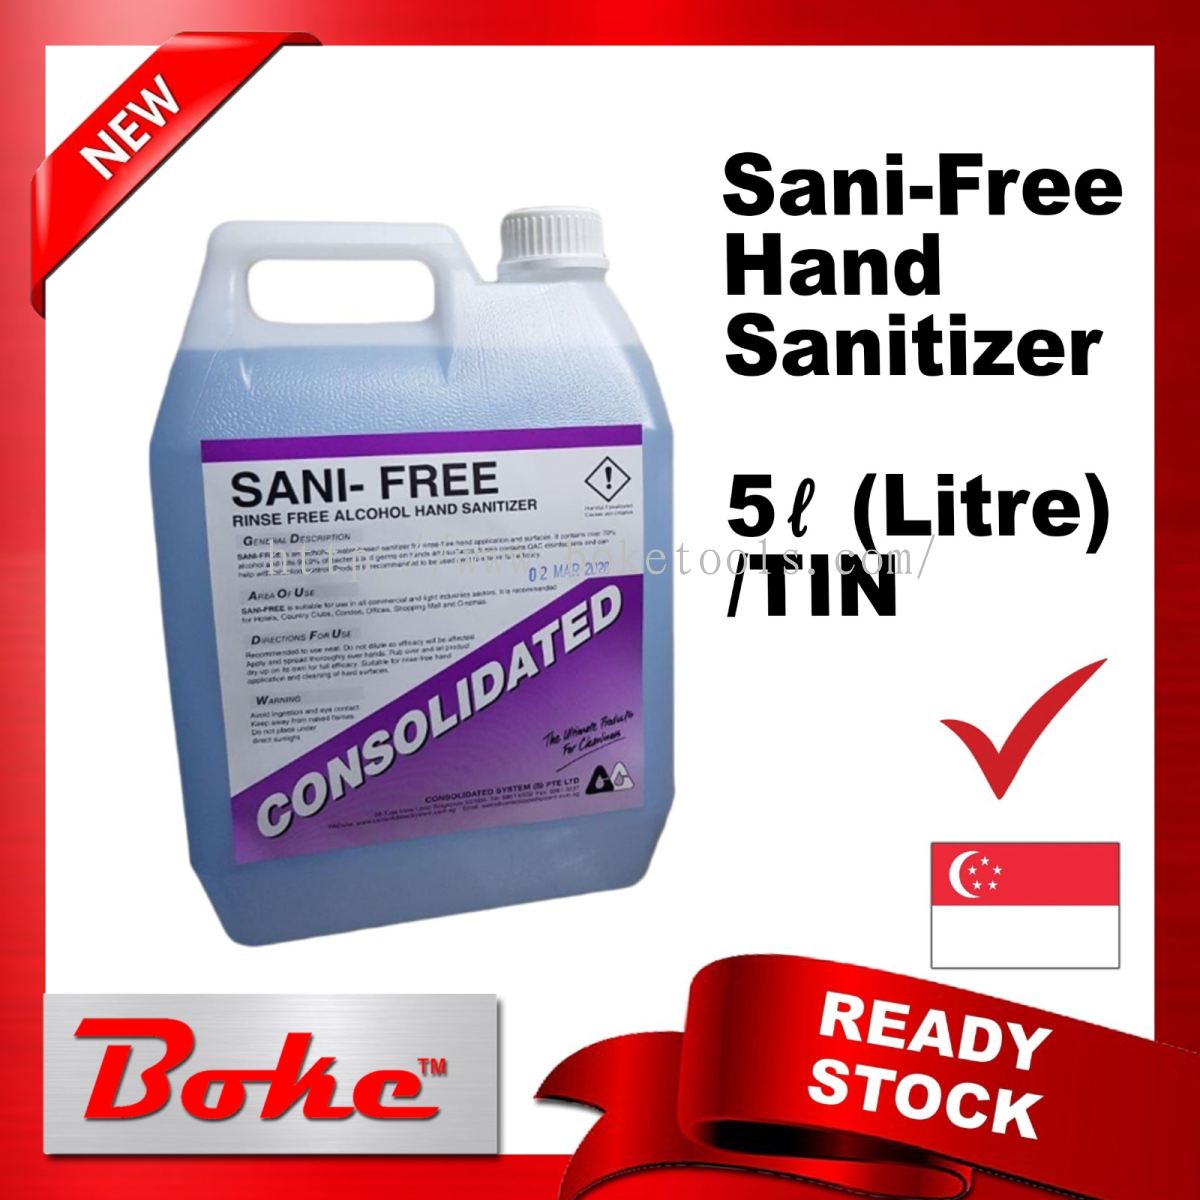 Boke Tools Machinery Pte Ltd:SANI-FREE RINSE FREE WATER BASED HAND SANITIZER 5L Litre